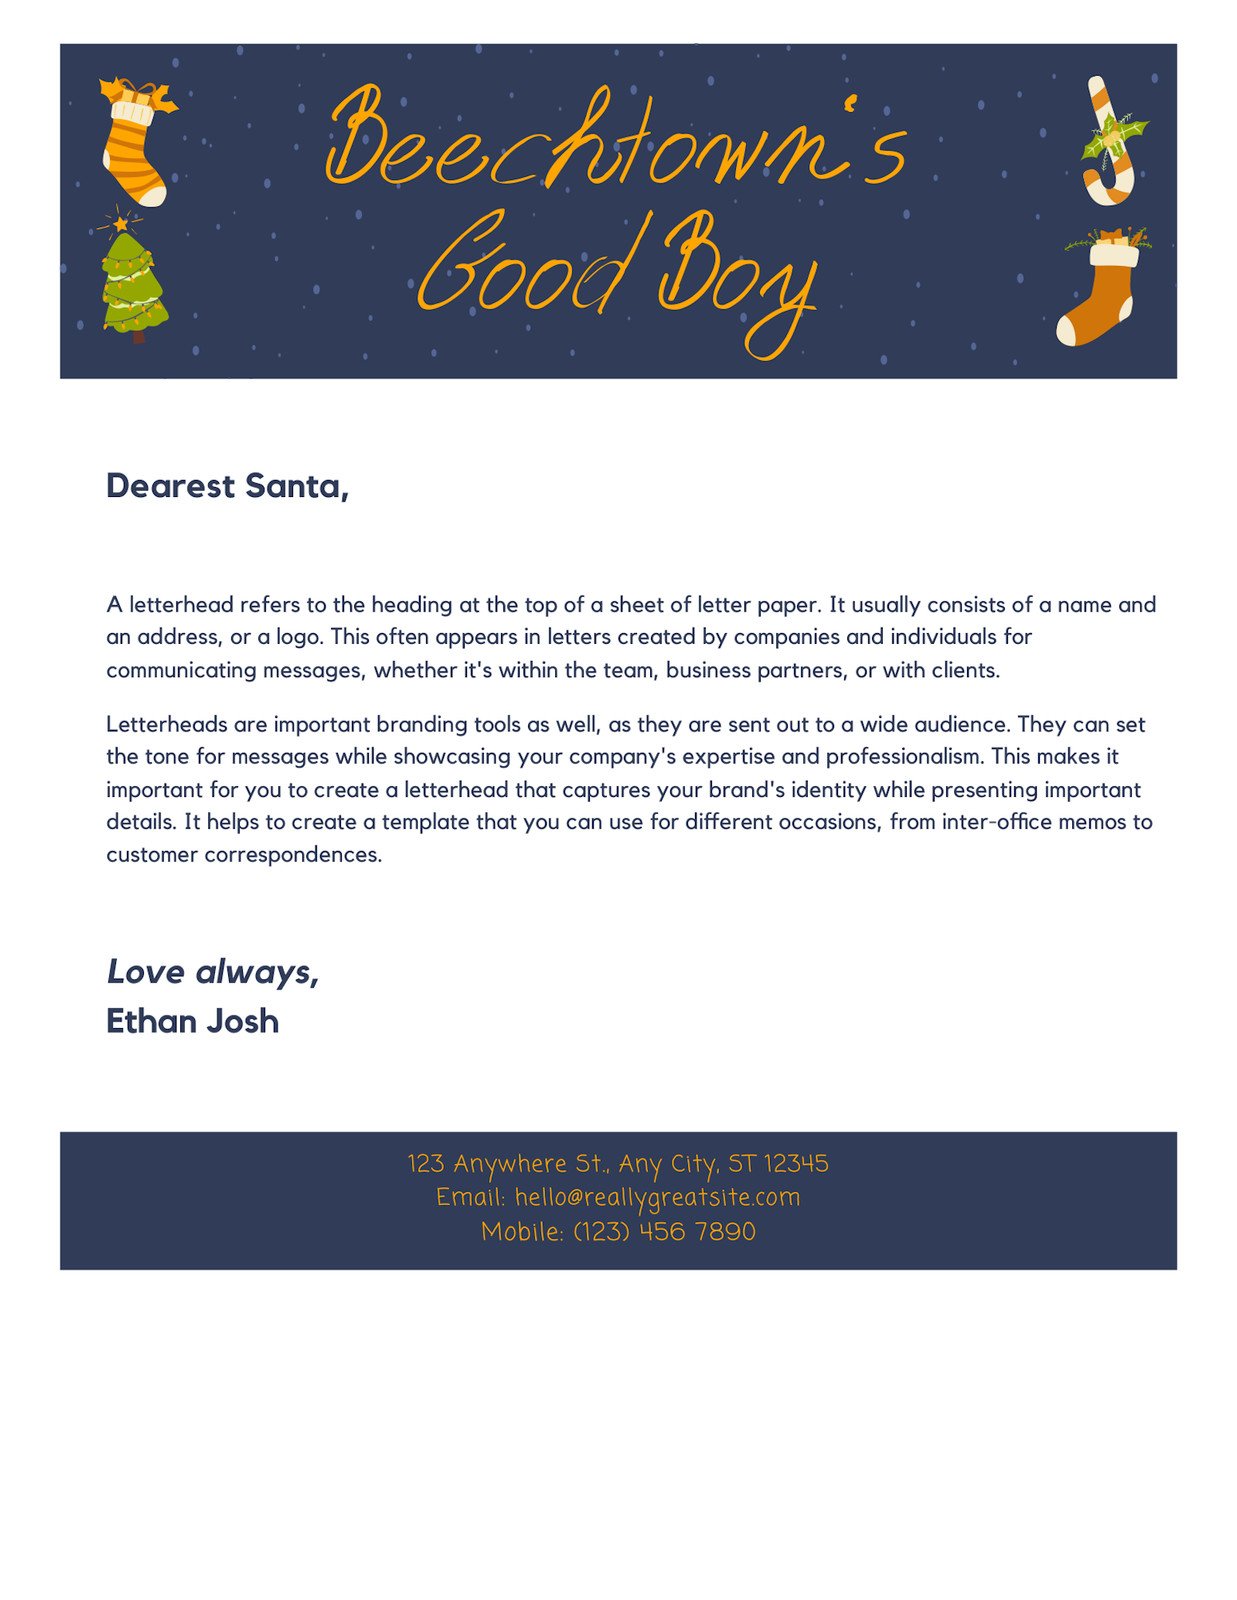 Christmas Letter Doc in Dark Blue Bright Orange Yellow Green Playful Illustrative Style